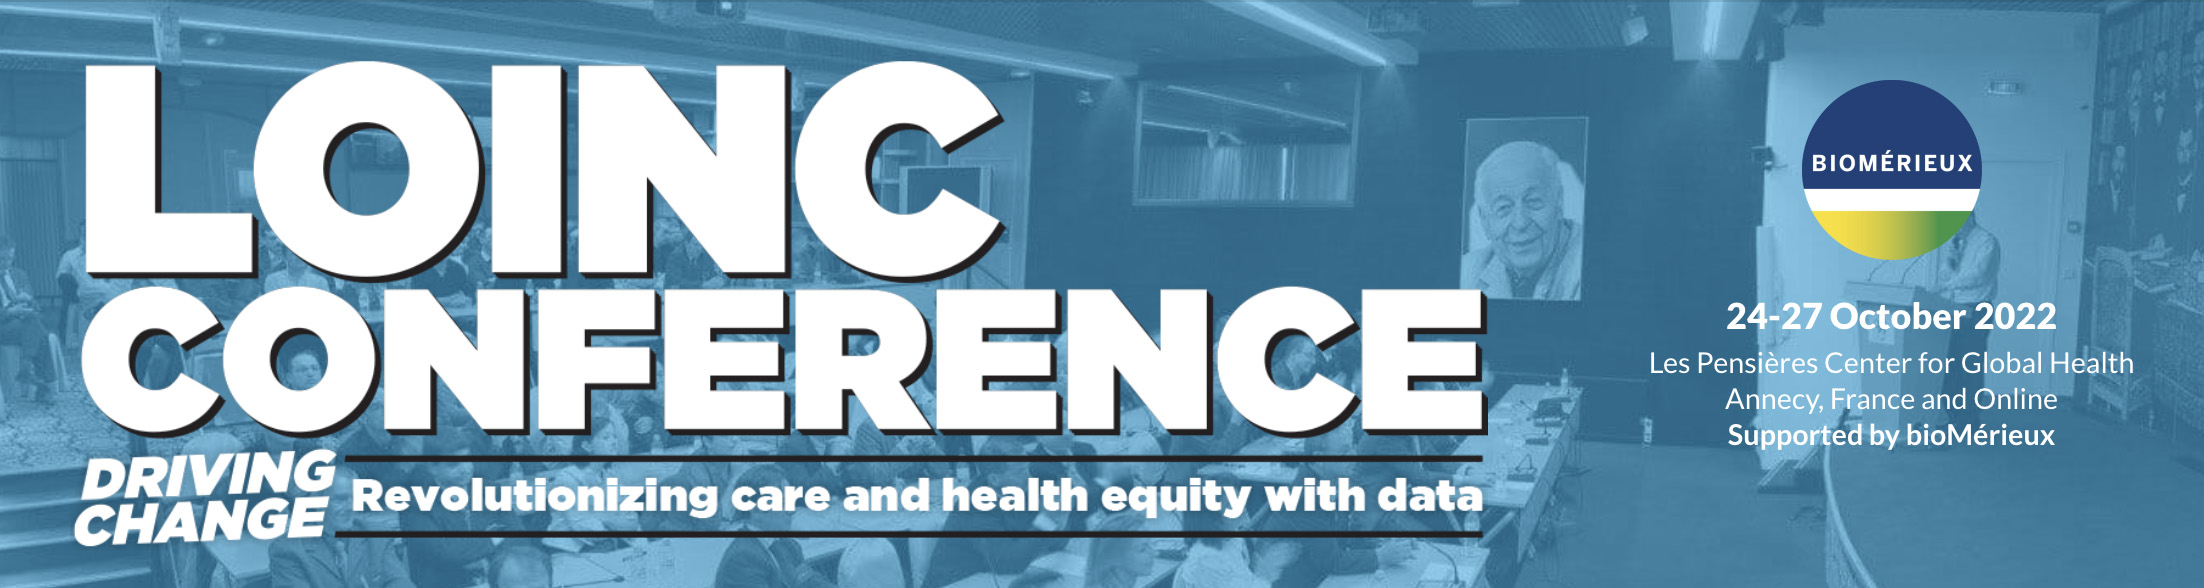 LOINC conference logo.